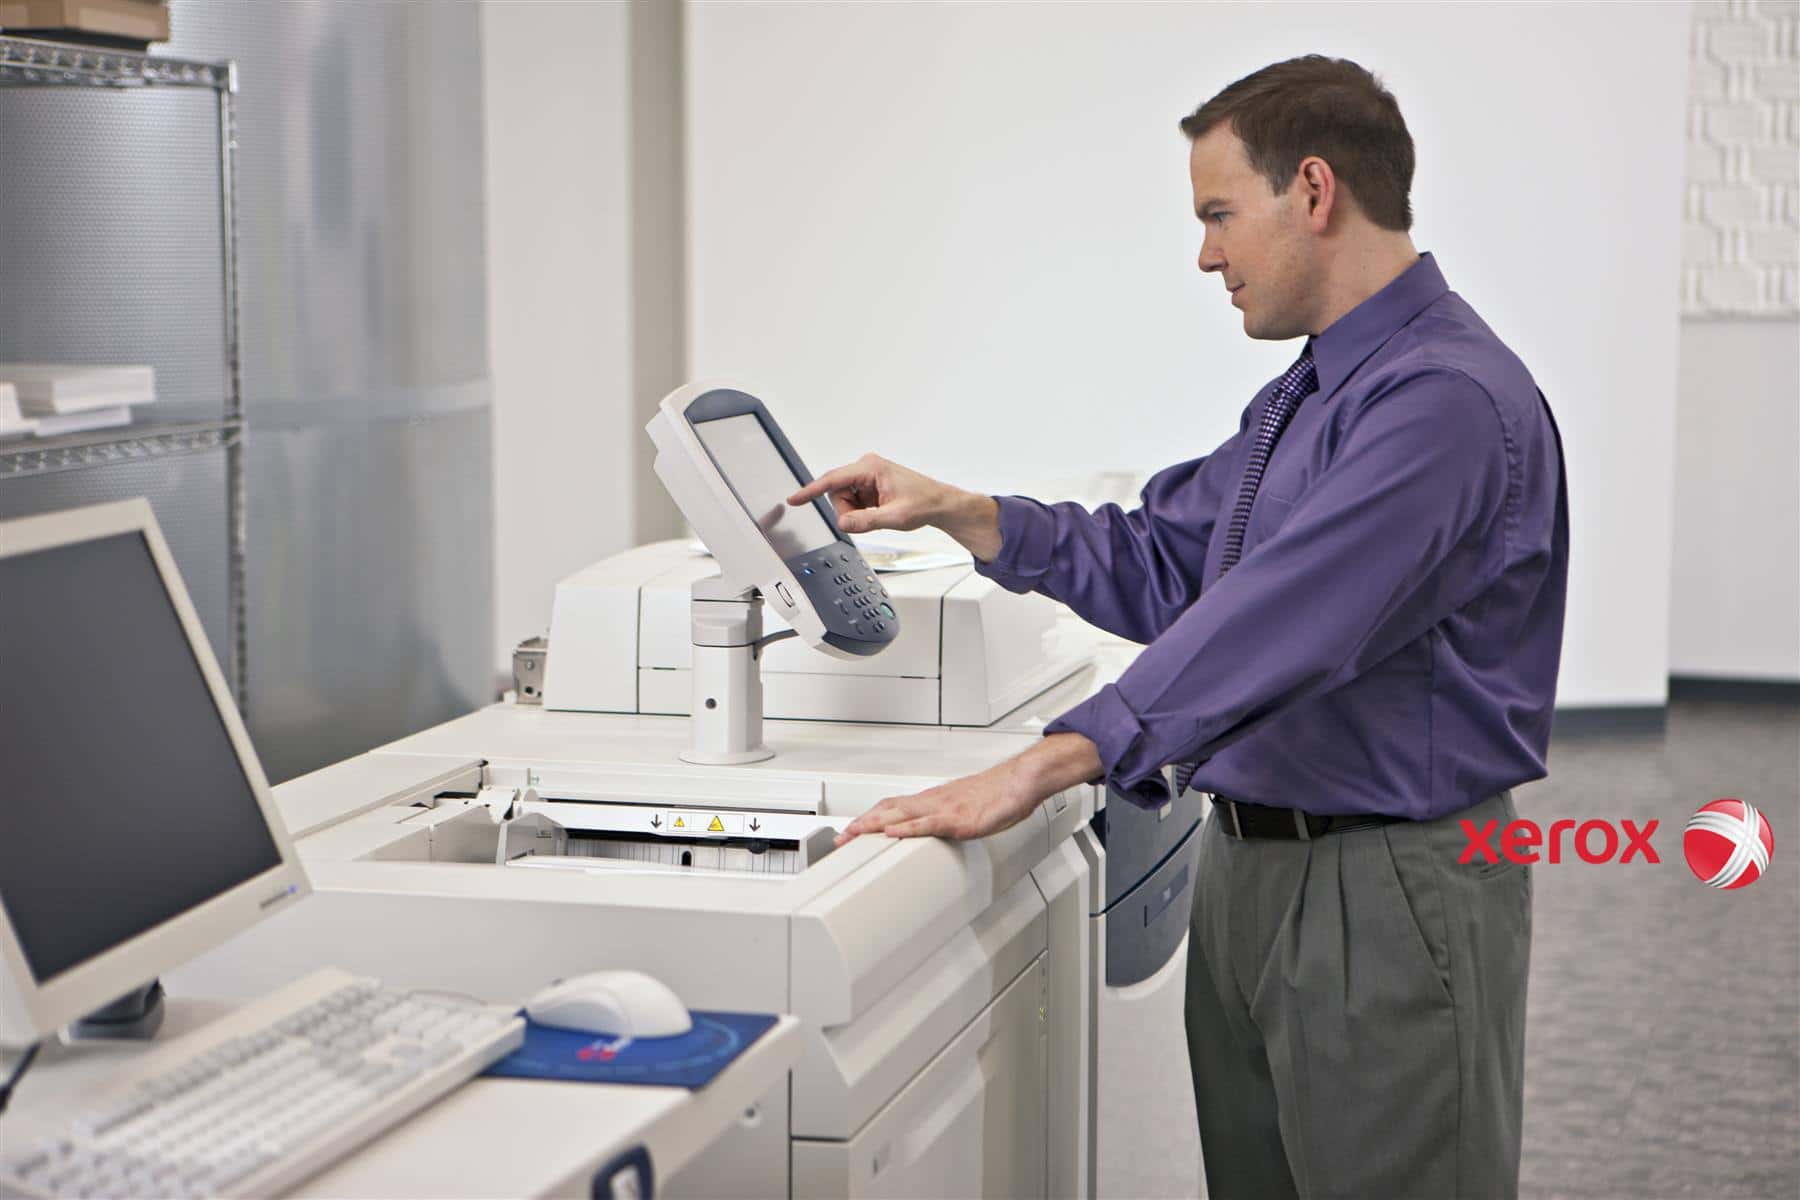 Xerox Impresión Digital